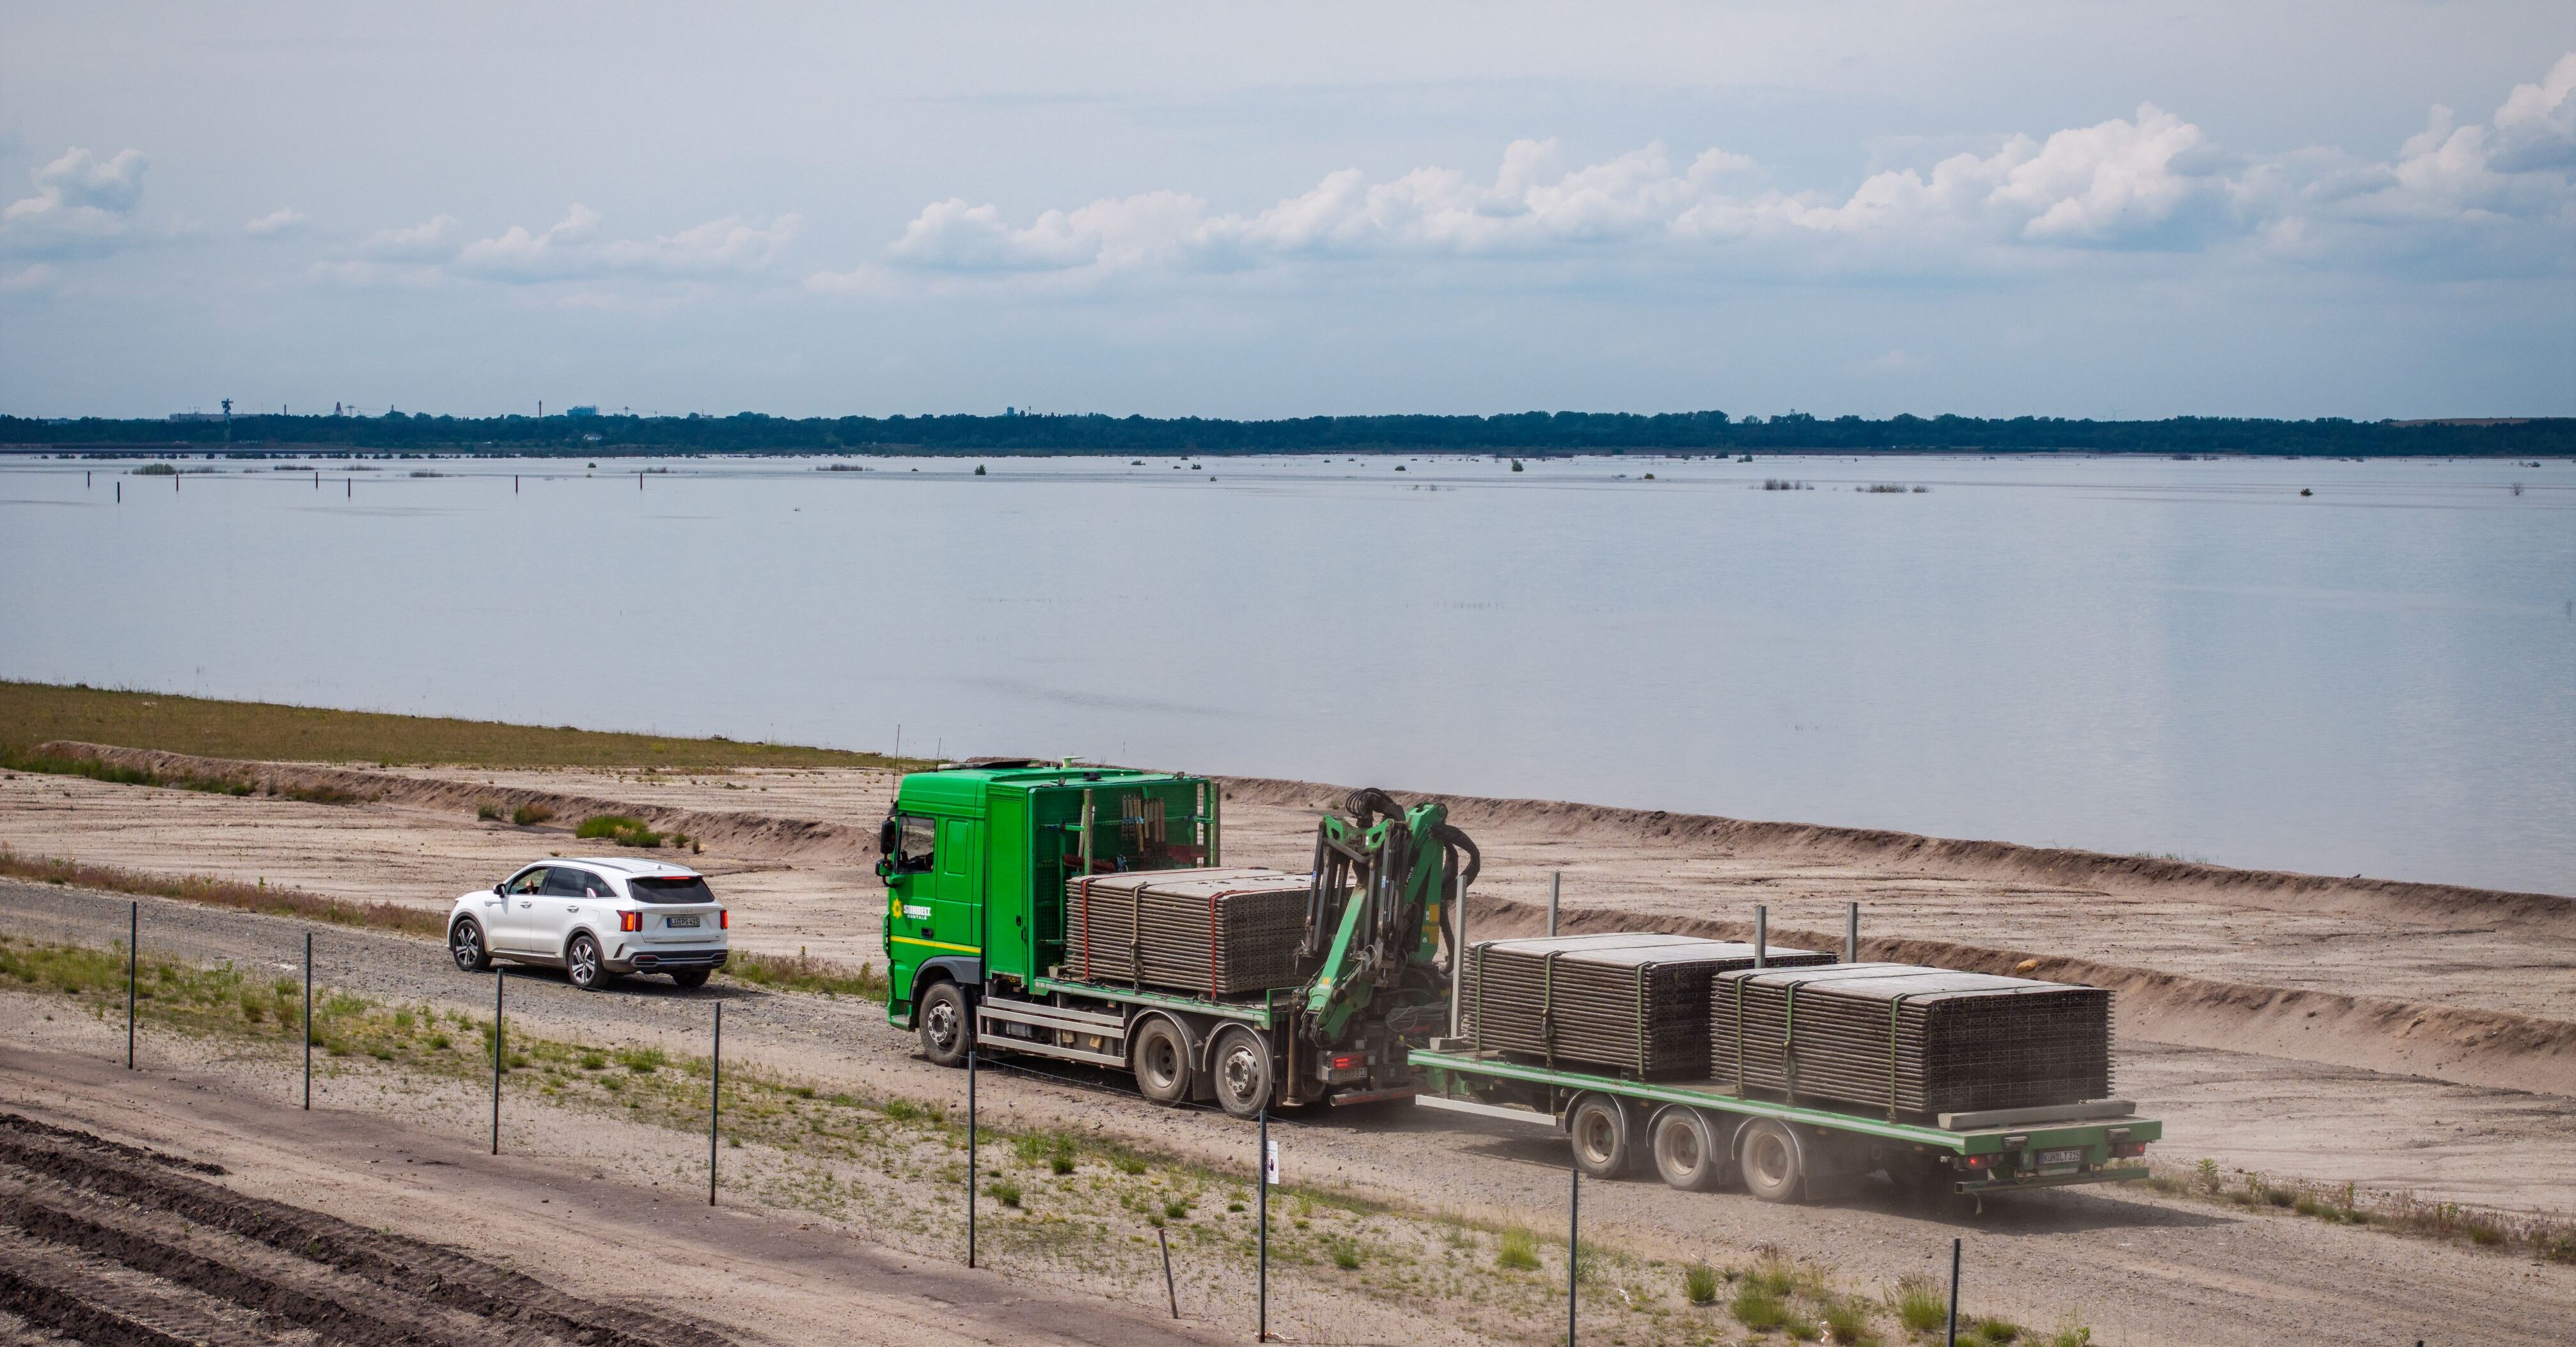 Floating solar panels arriving at the Cottbus Baltic Sea via trucks